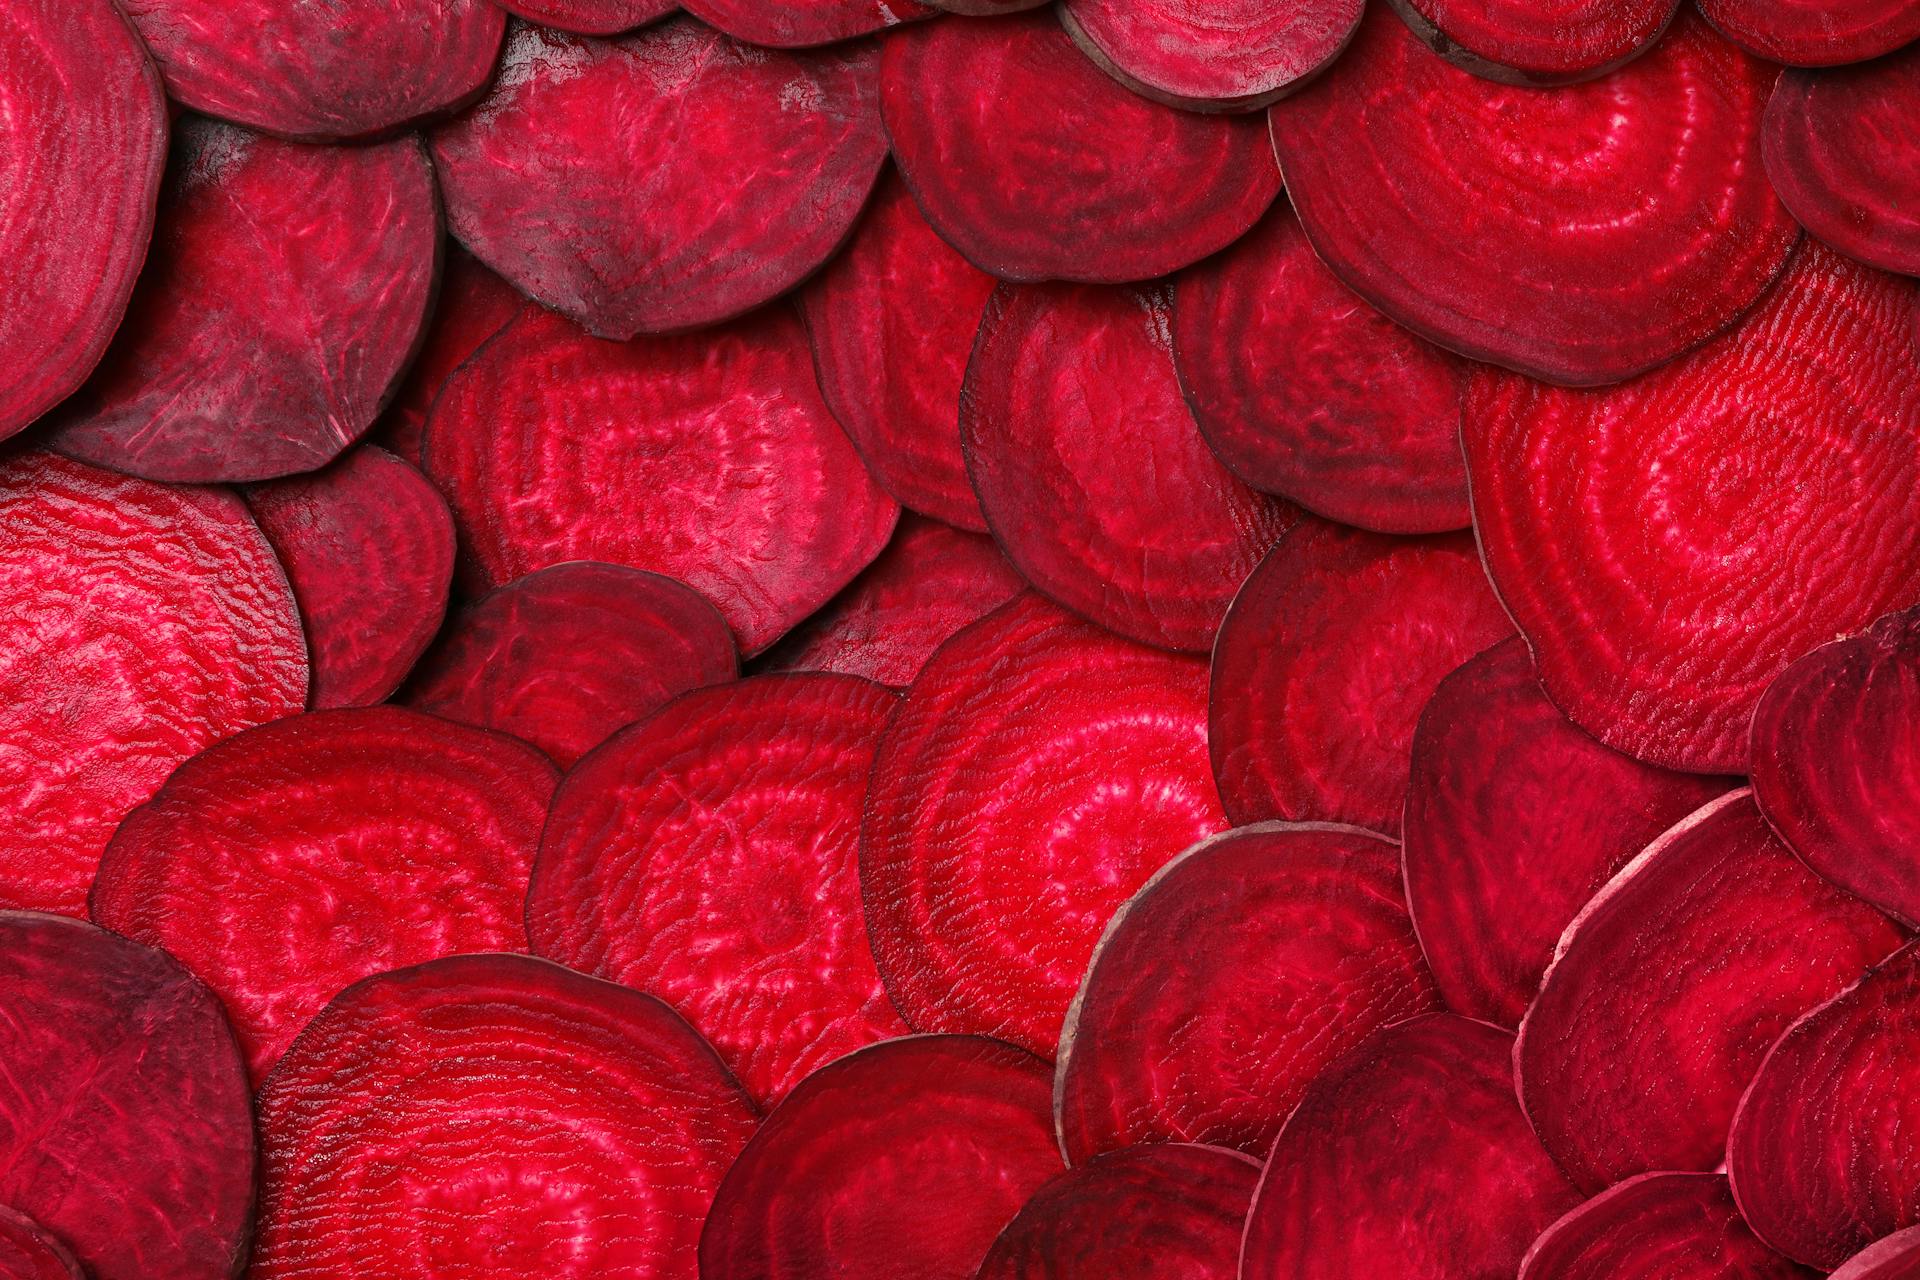 Rote Beete in Scheiben geschnitten